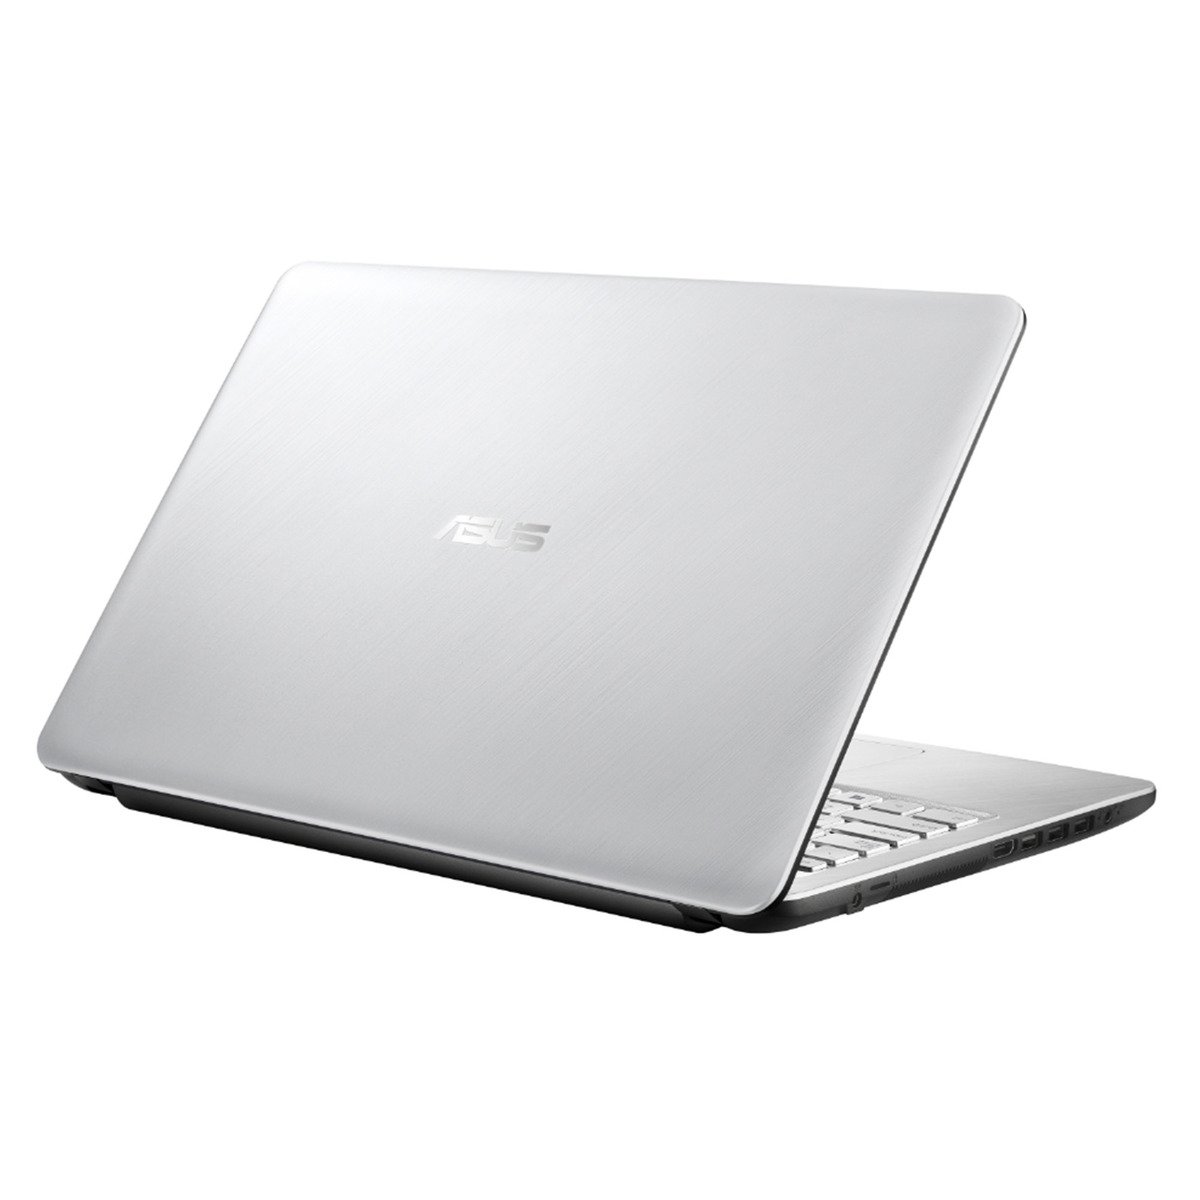 Asus  X543MA-GQ509T Notebook, Intel Celeron N4000, 4 GB RAM, 1 TB HDD, 15.6" Display,  Wnidows 10